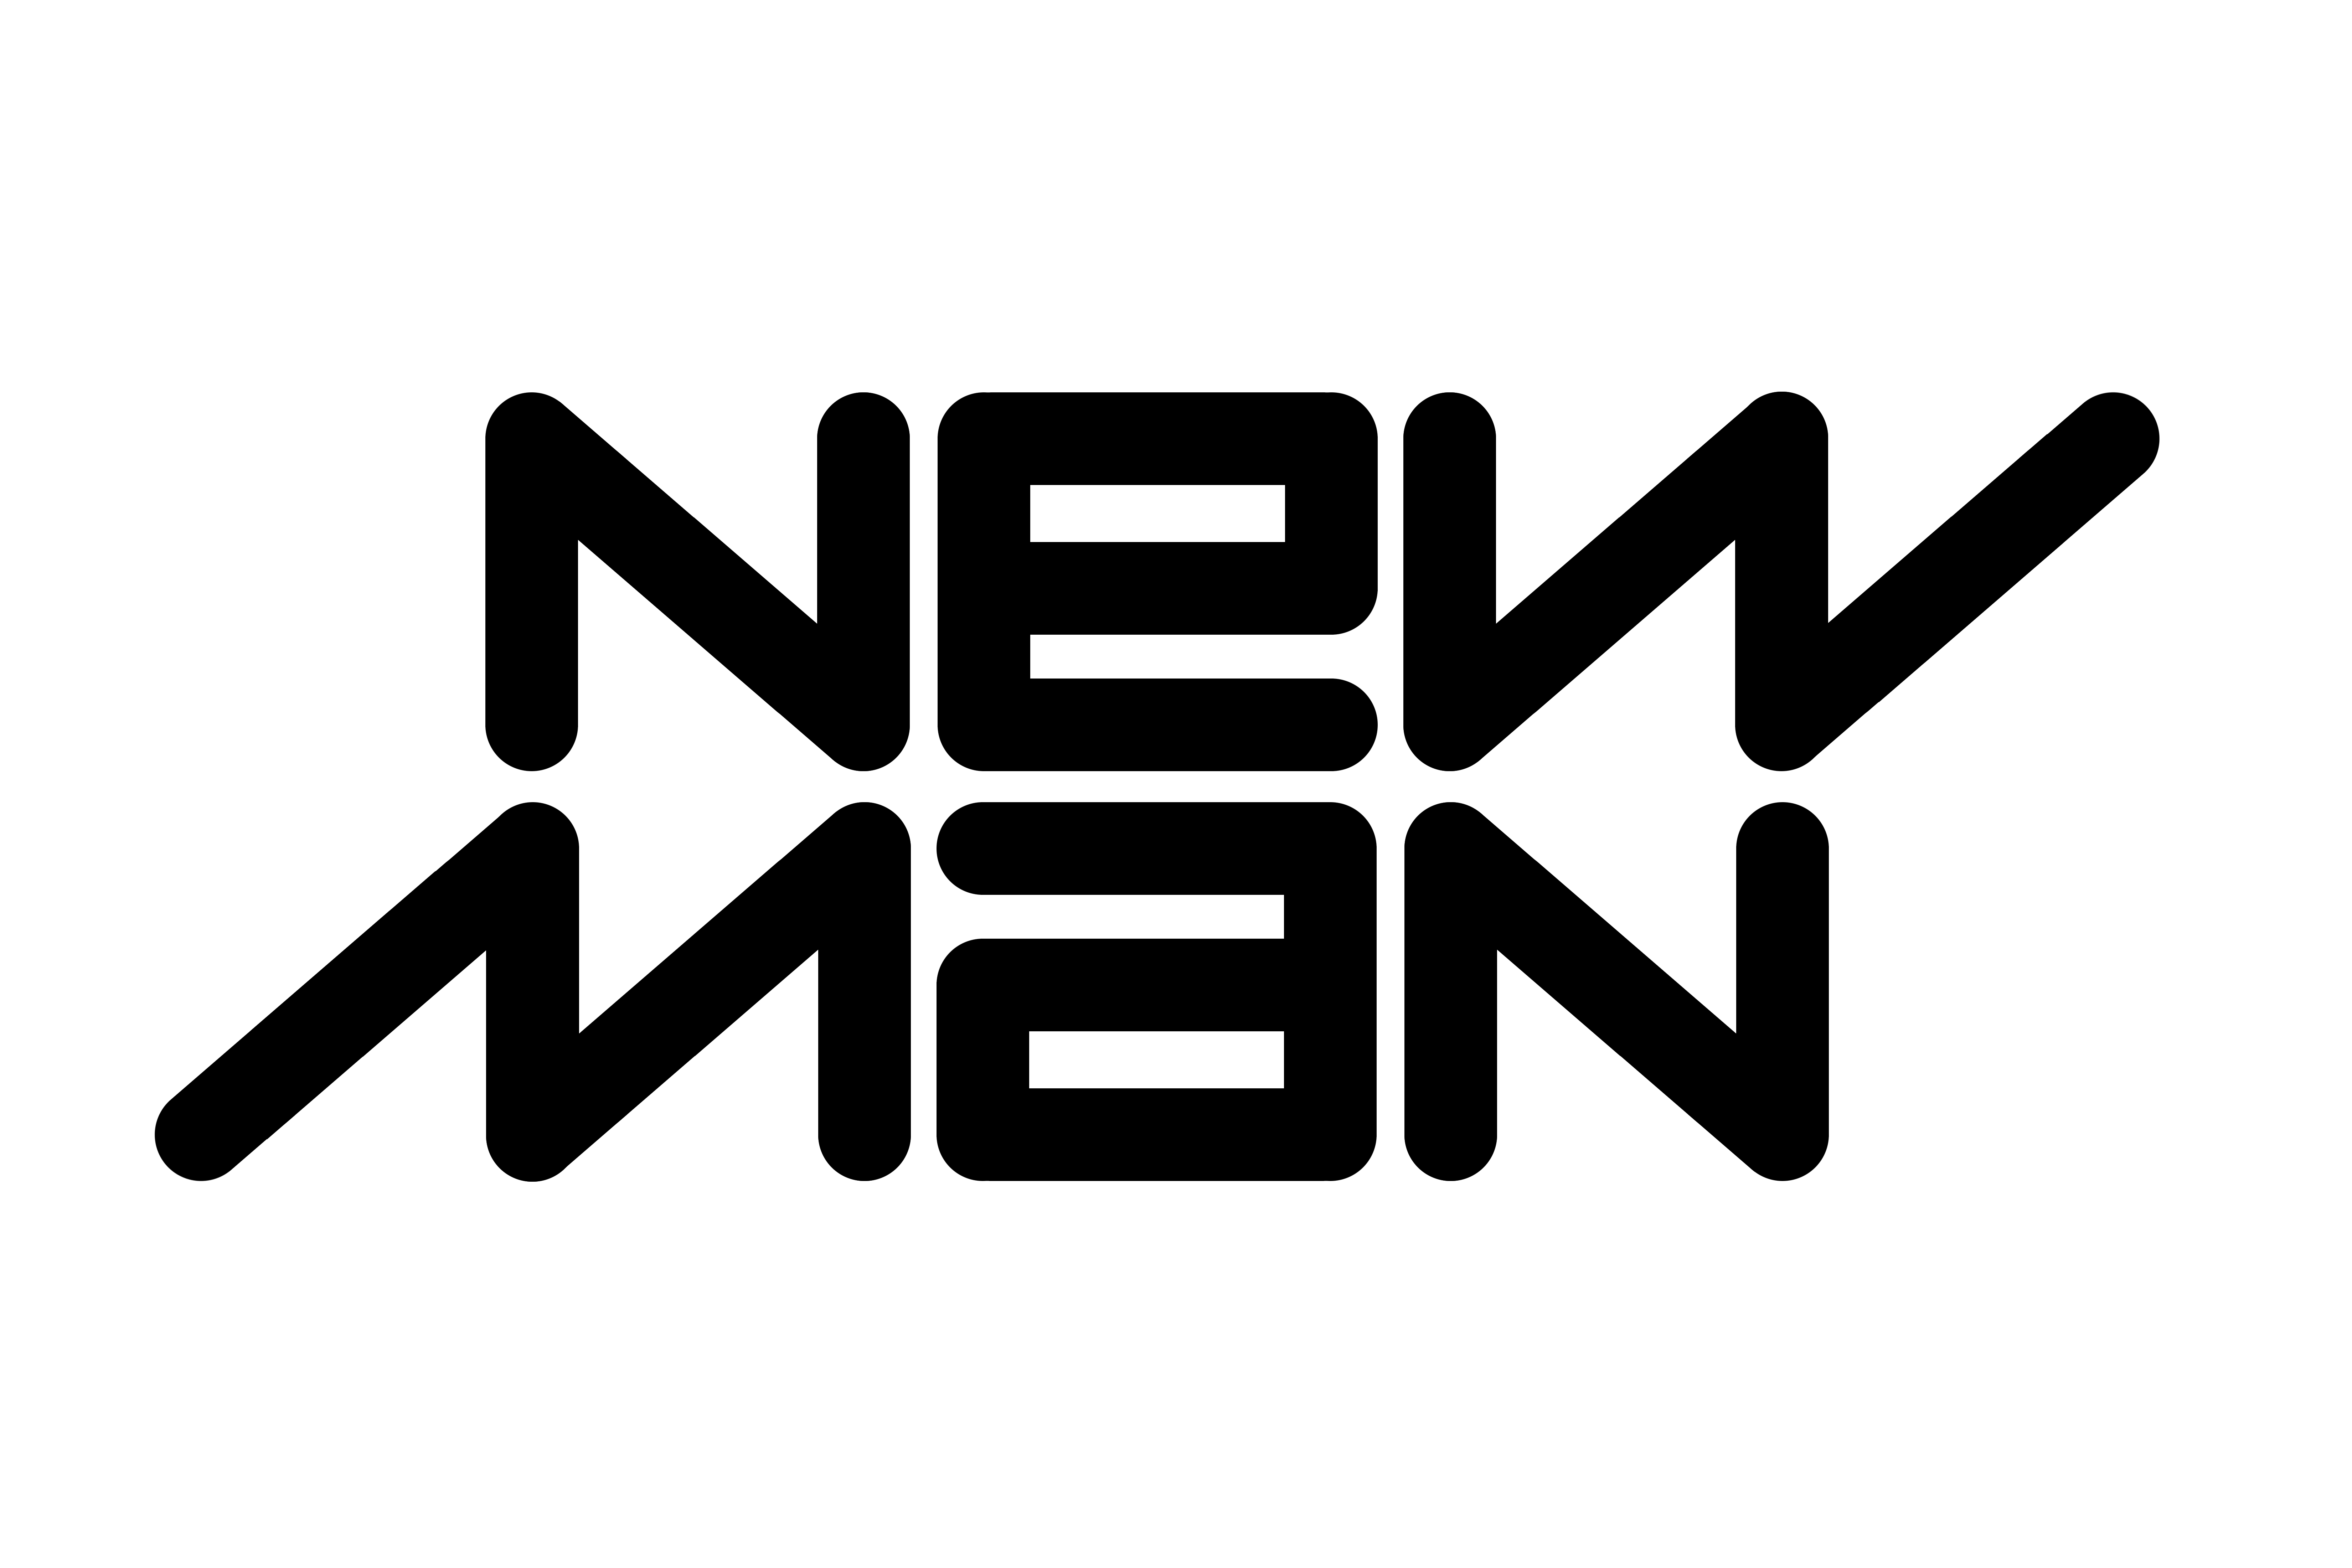 NEW MAN